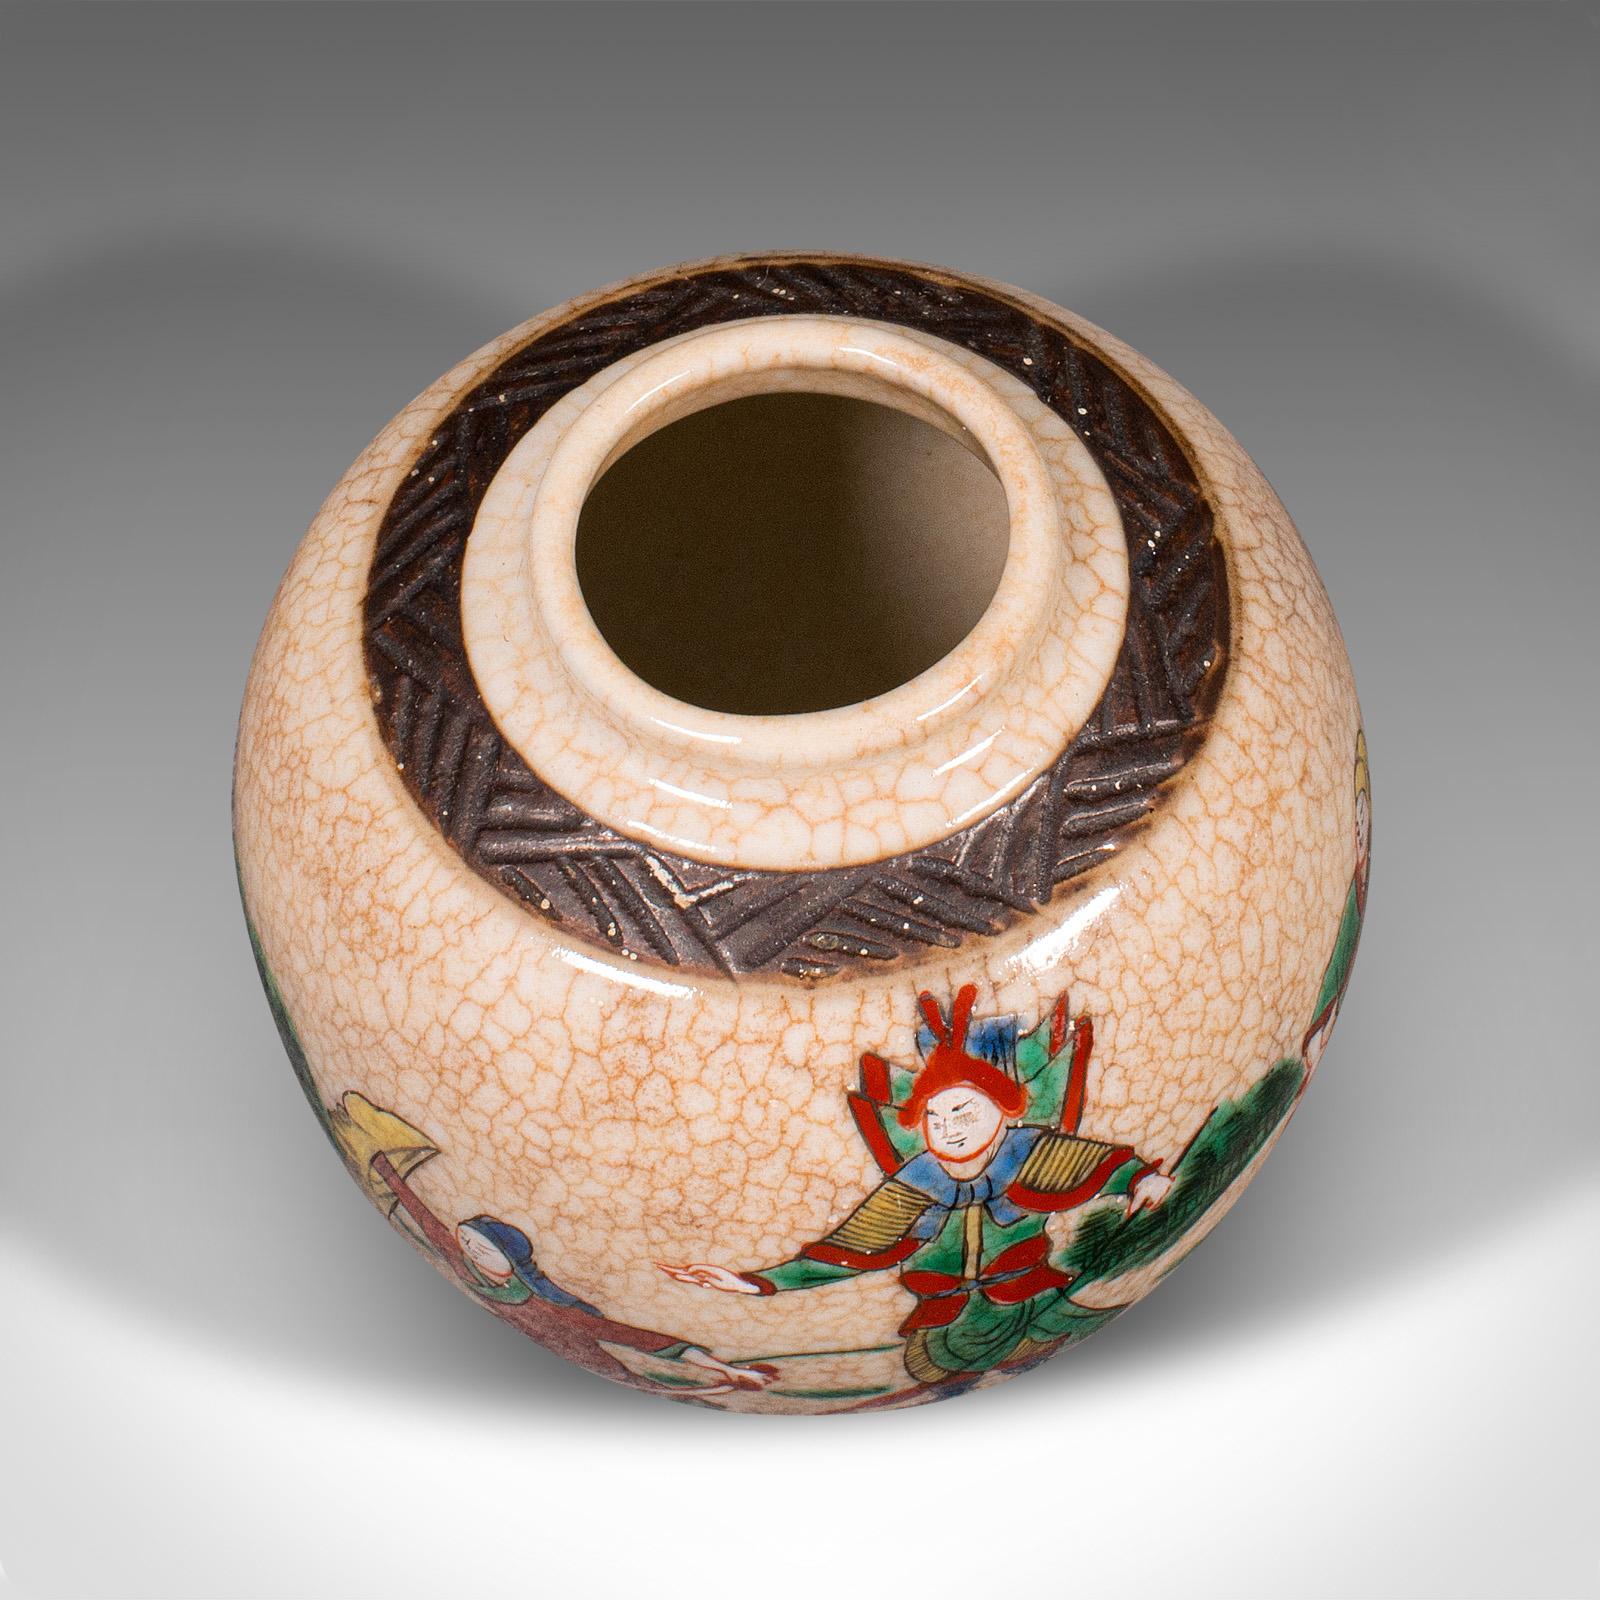 Small Antique Spice Jar, Japanese, Ceramic, Decorative Pot, Victorian, C.1900 For Sale 3